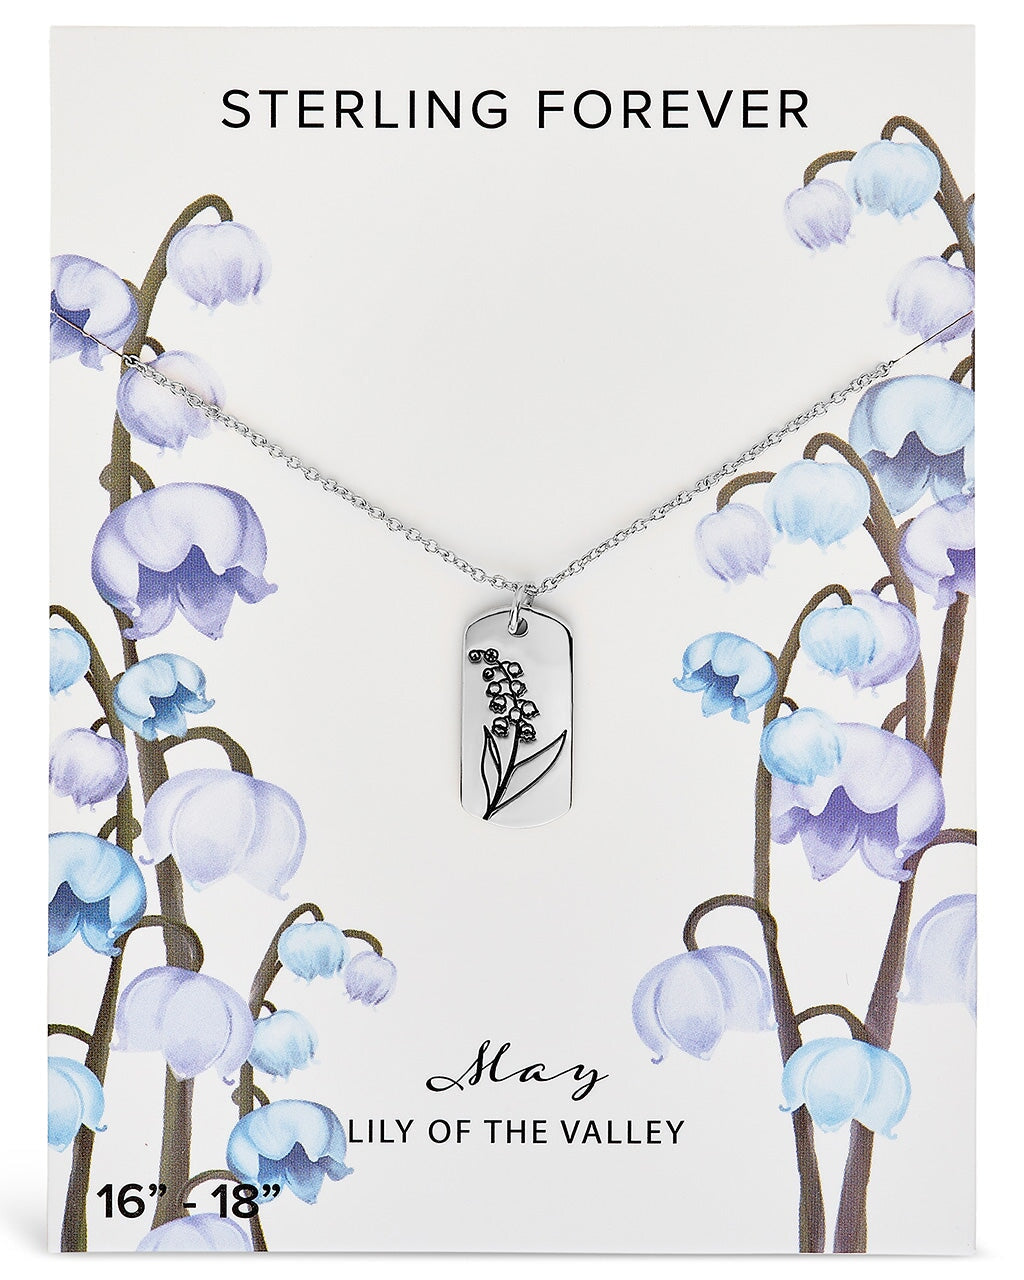 Birth Flower Pendant Necklace Sterling Forever 